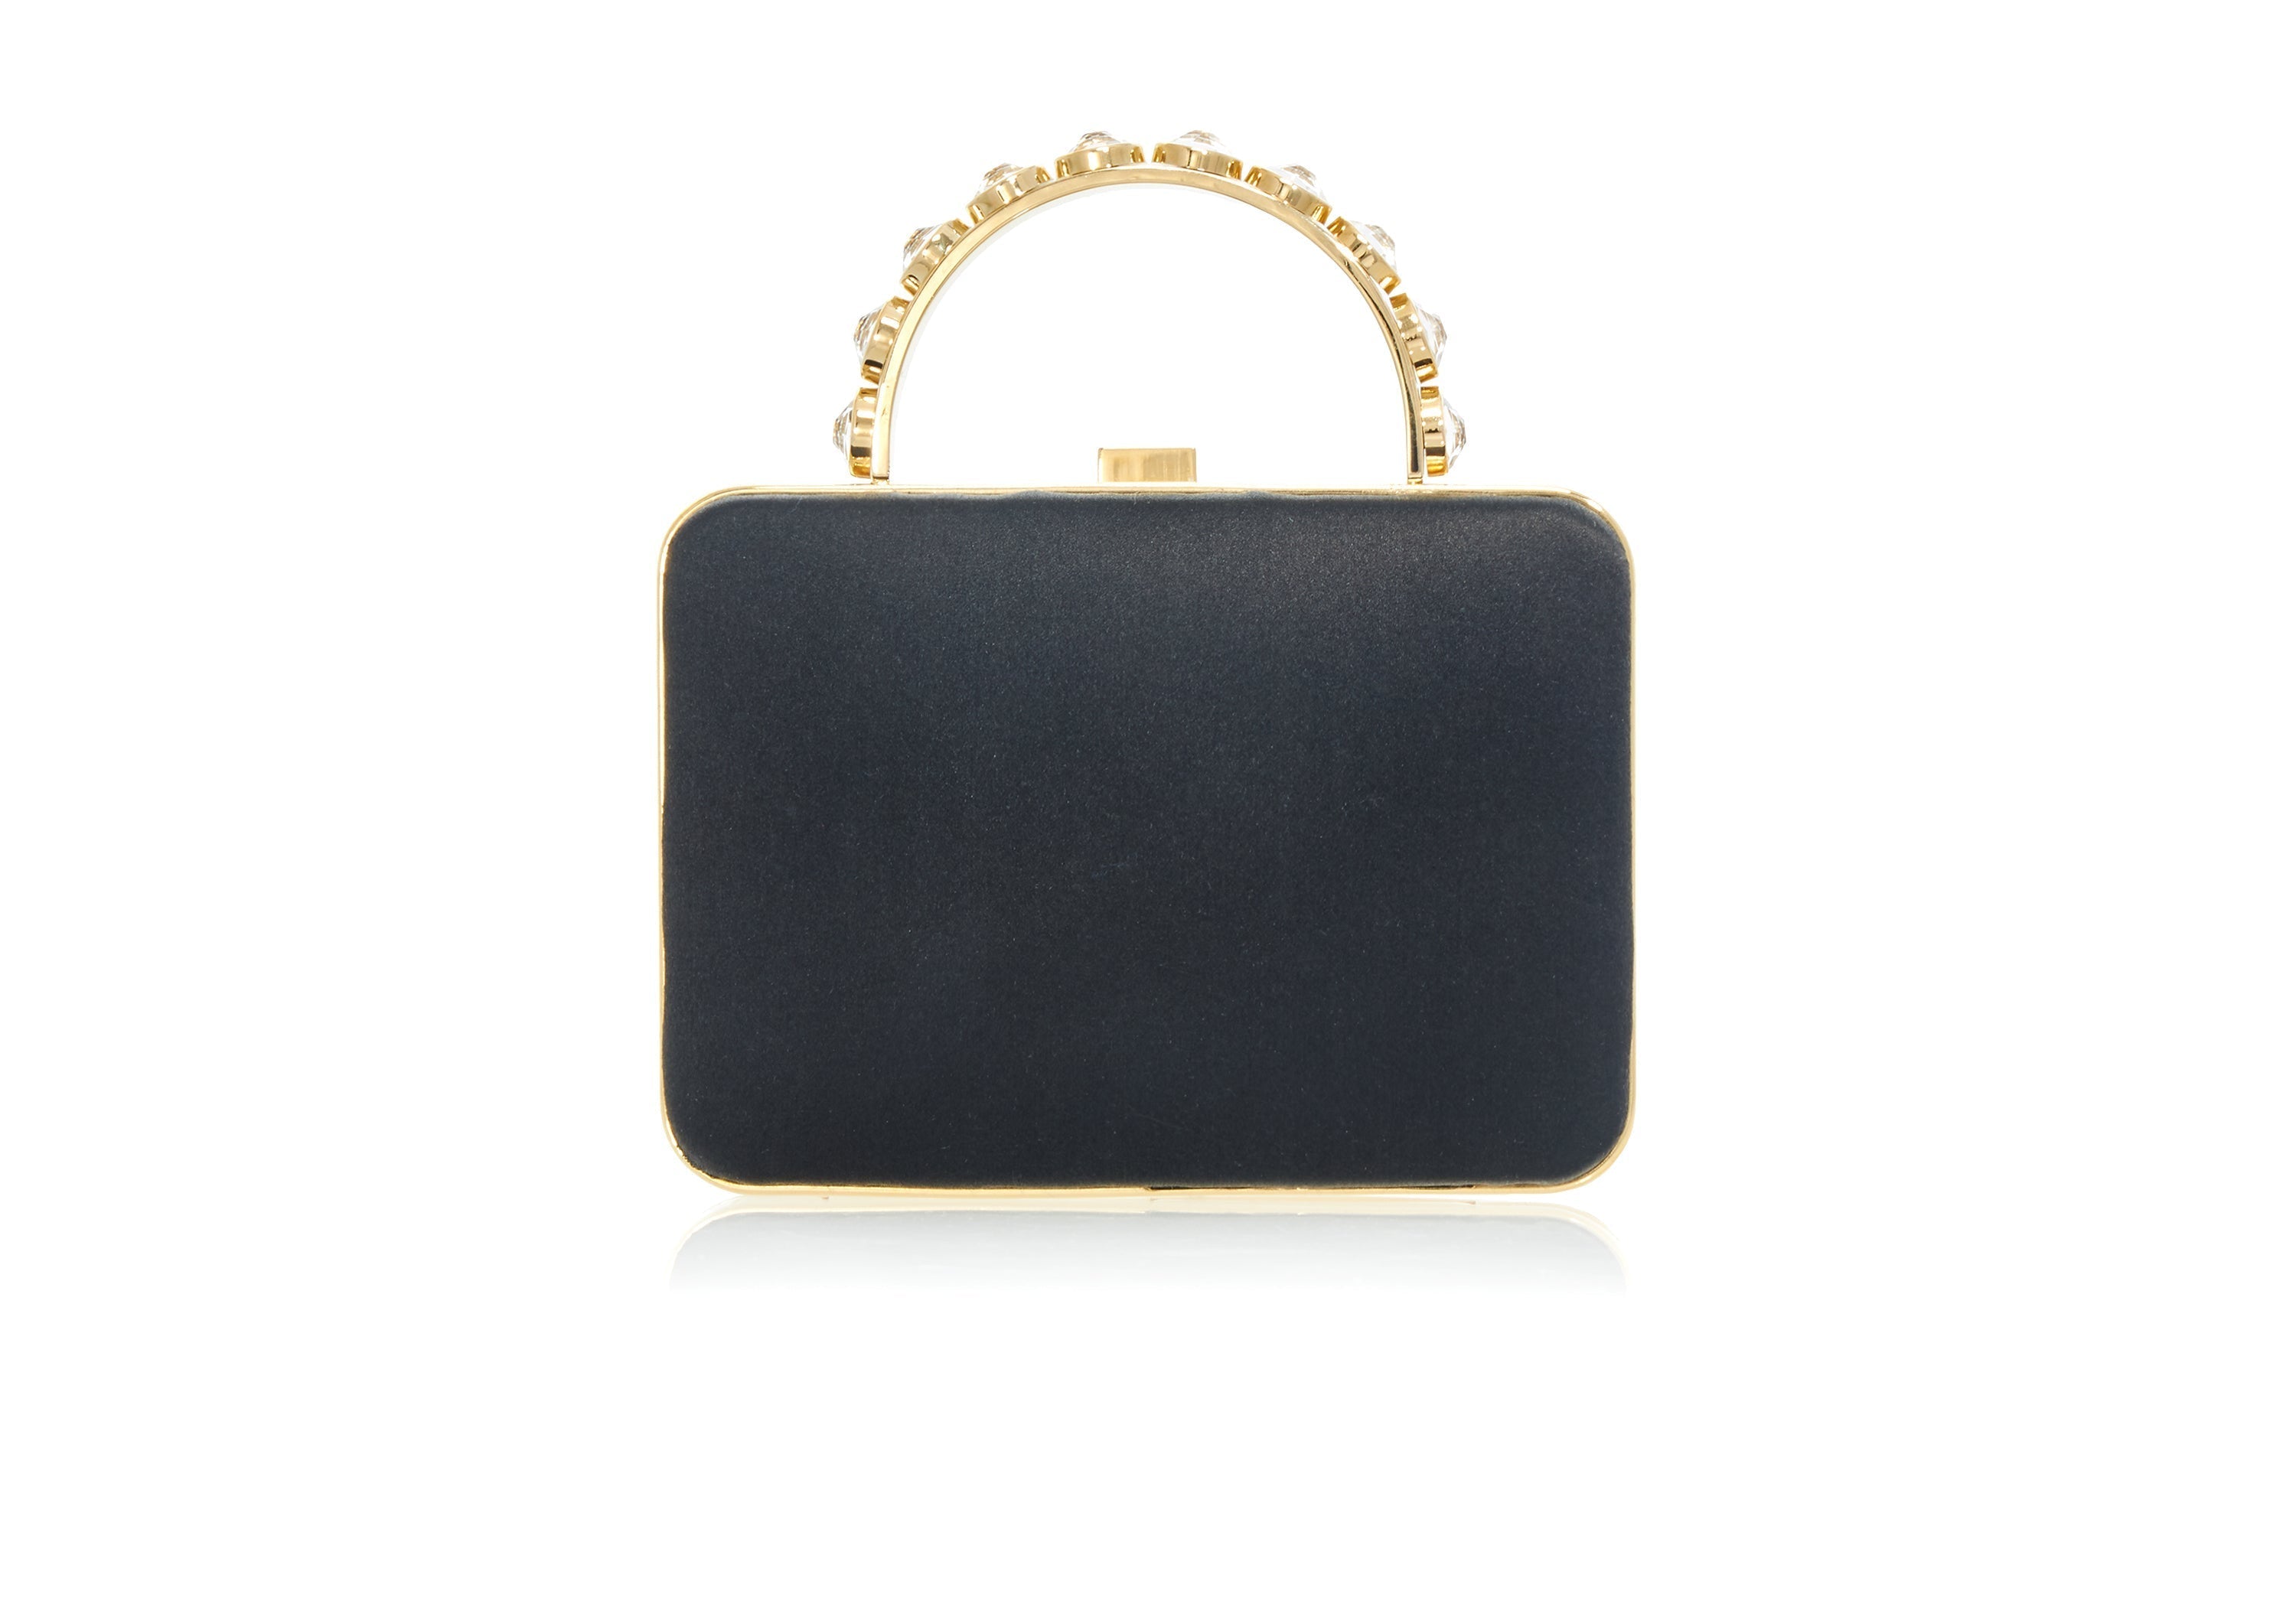 Elegant turkey handbags wholesale For Stylish And Trendy Looks